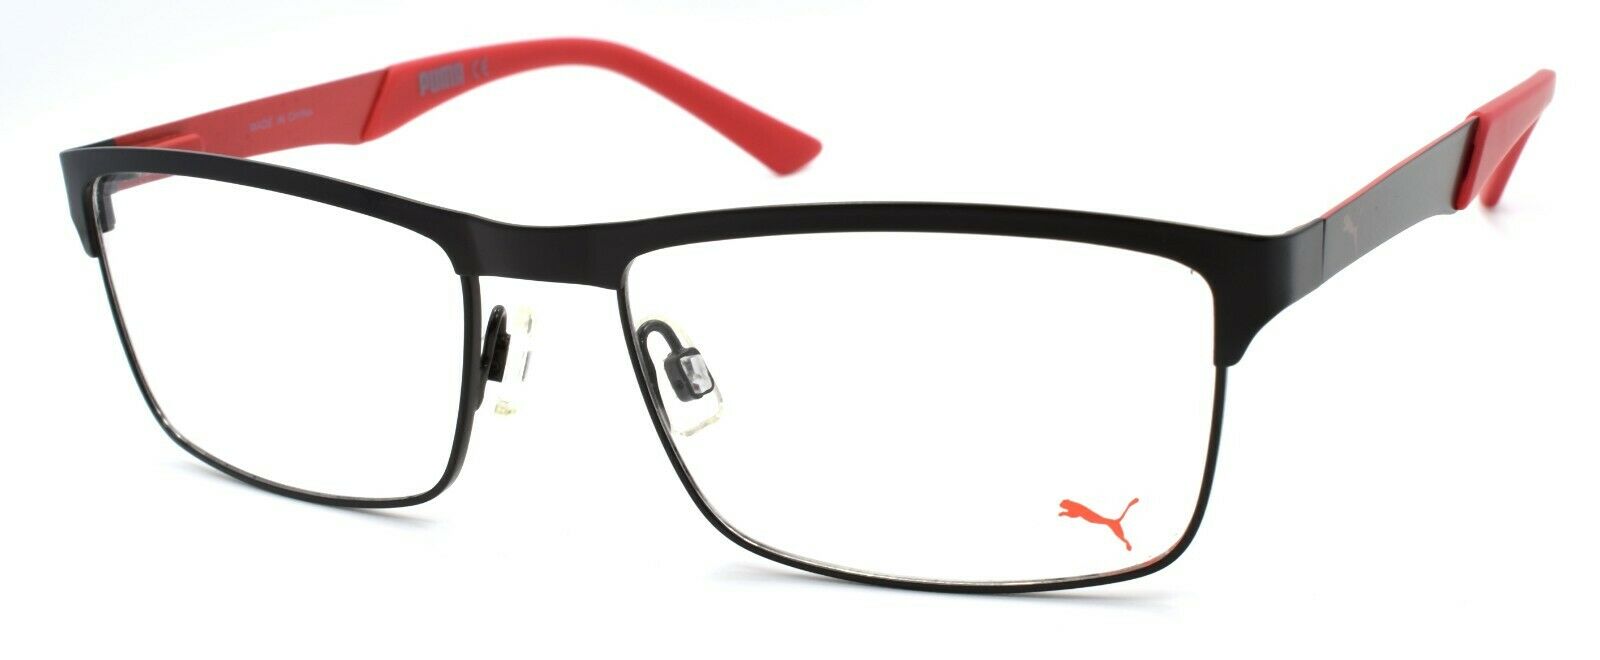 1-PUMA PE0011O 002 Men's Eyeglasses Frames 54-17-140 Black / Red-889652034416-IKSpecs